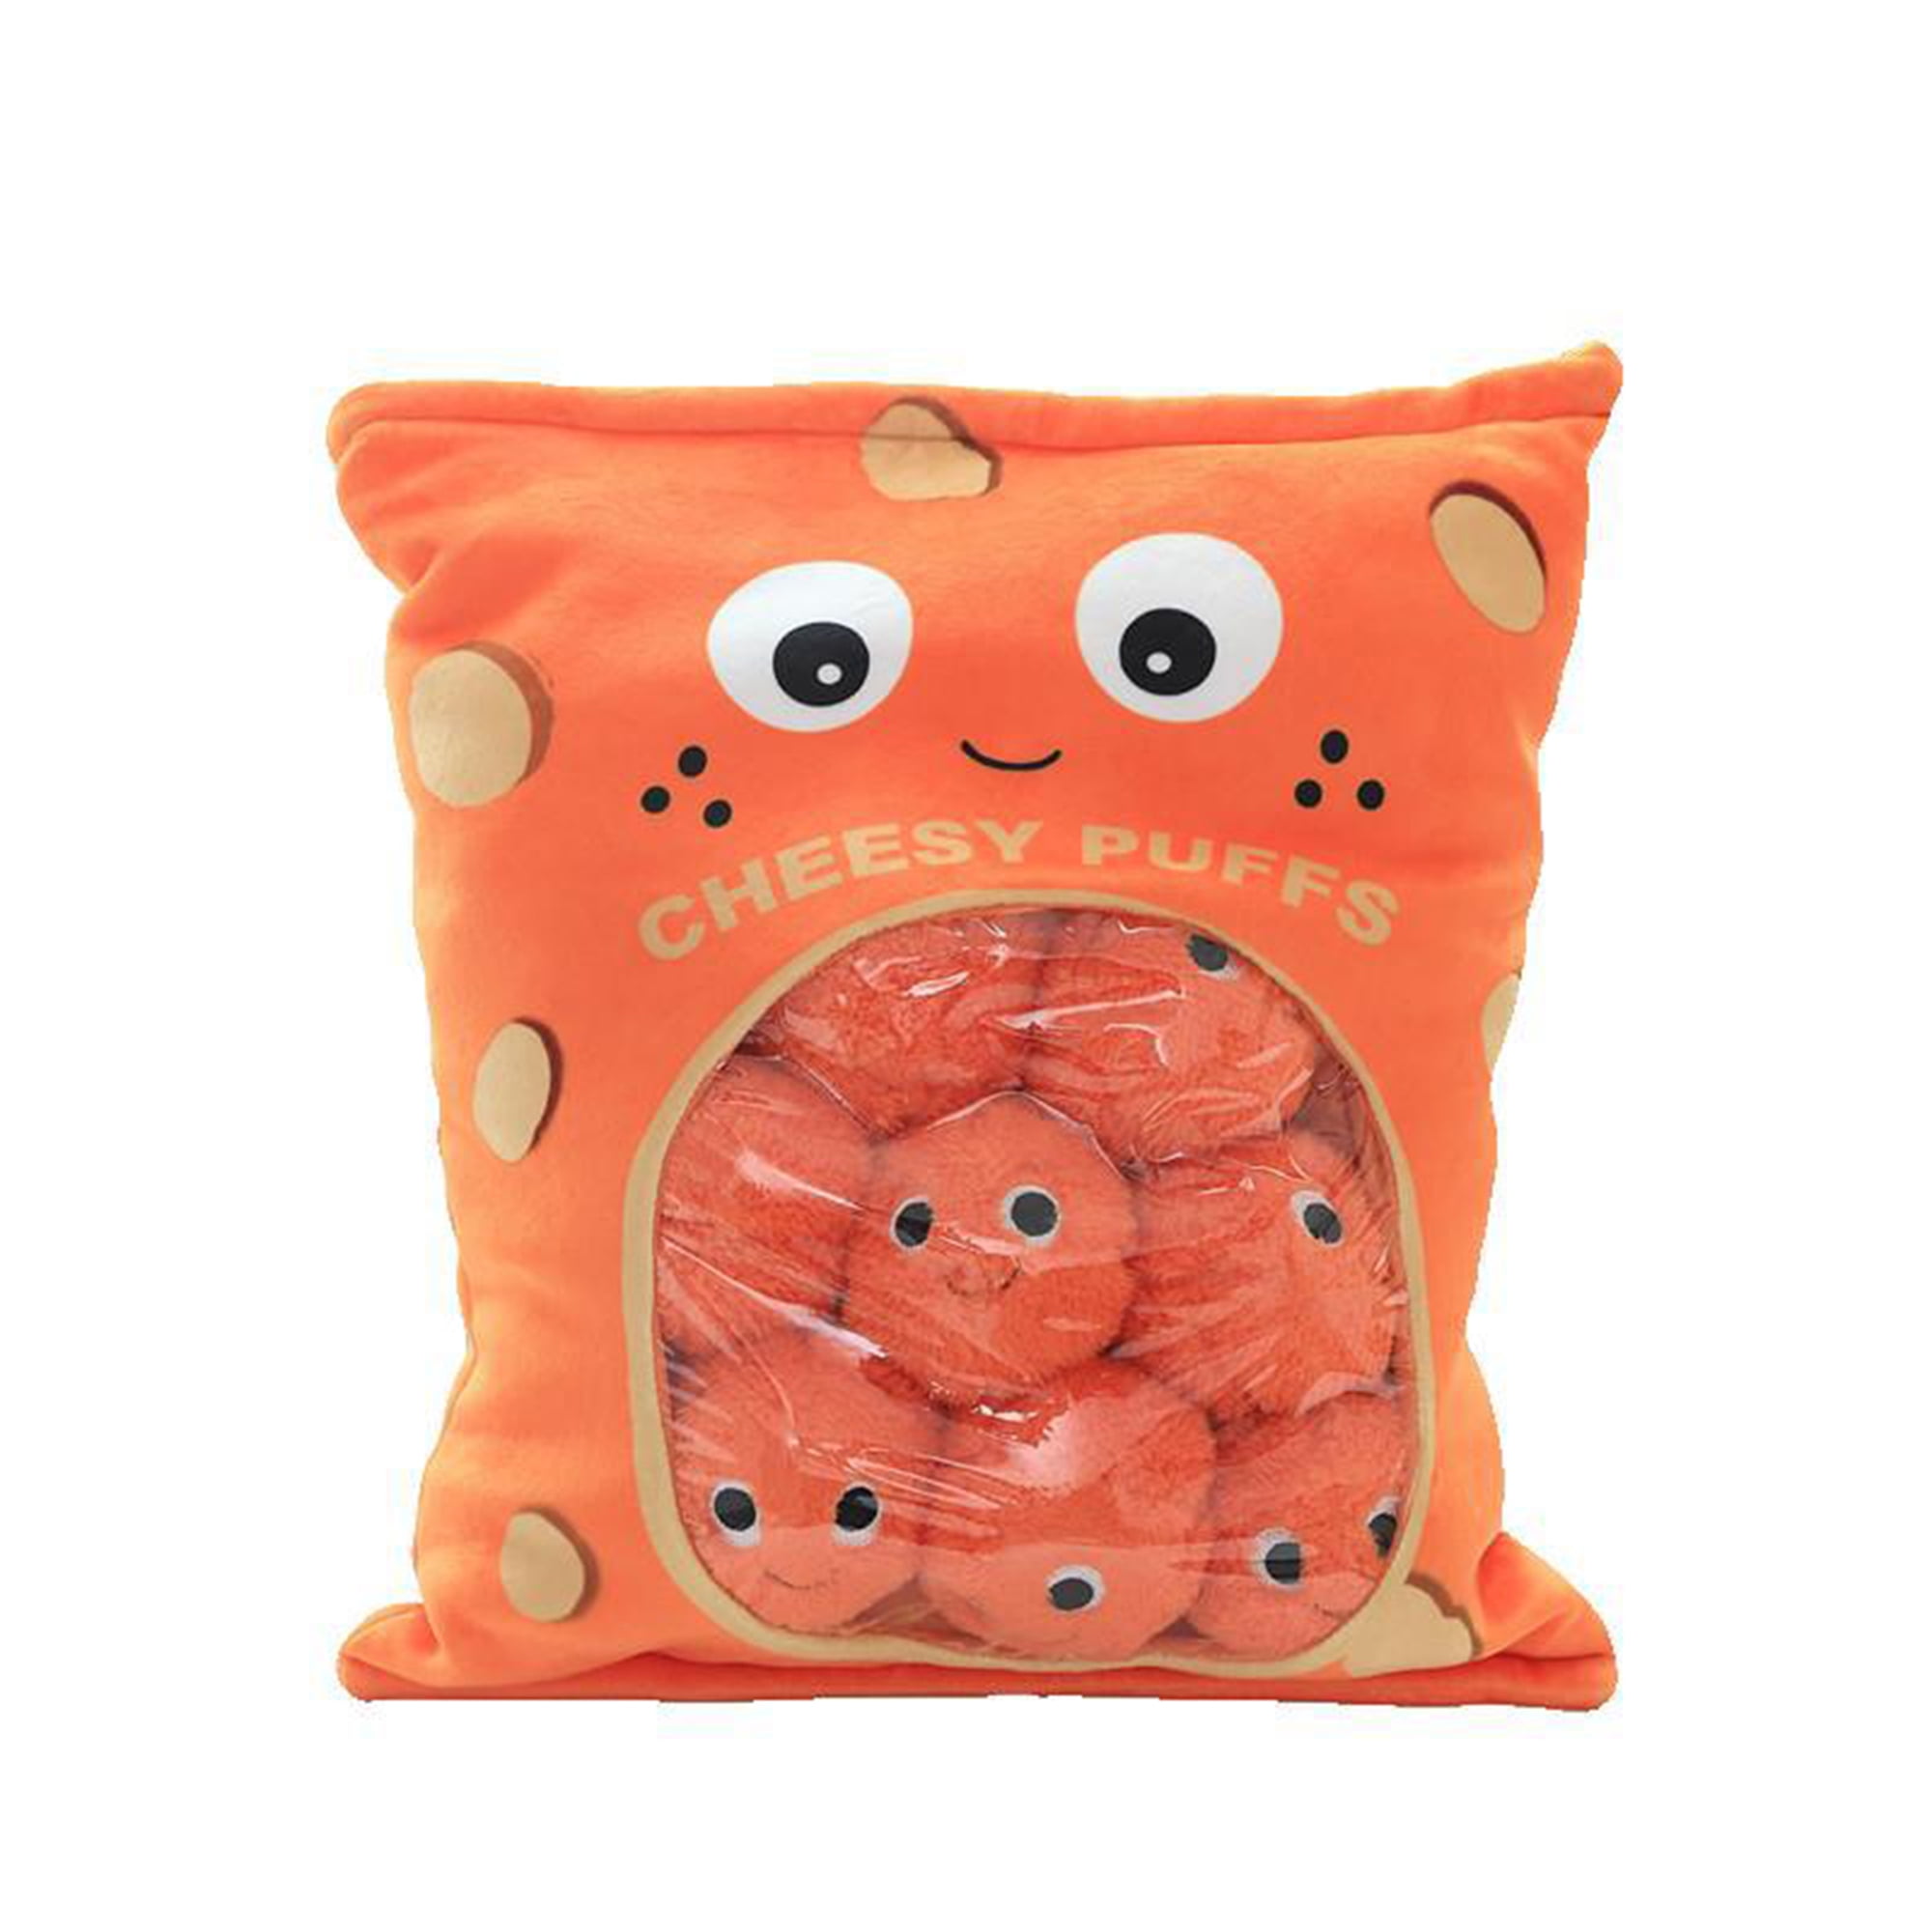 6pcs 9pcs a bag of cheesy puffs toy stuffed soft snack pillow plush kids toys 